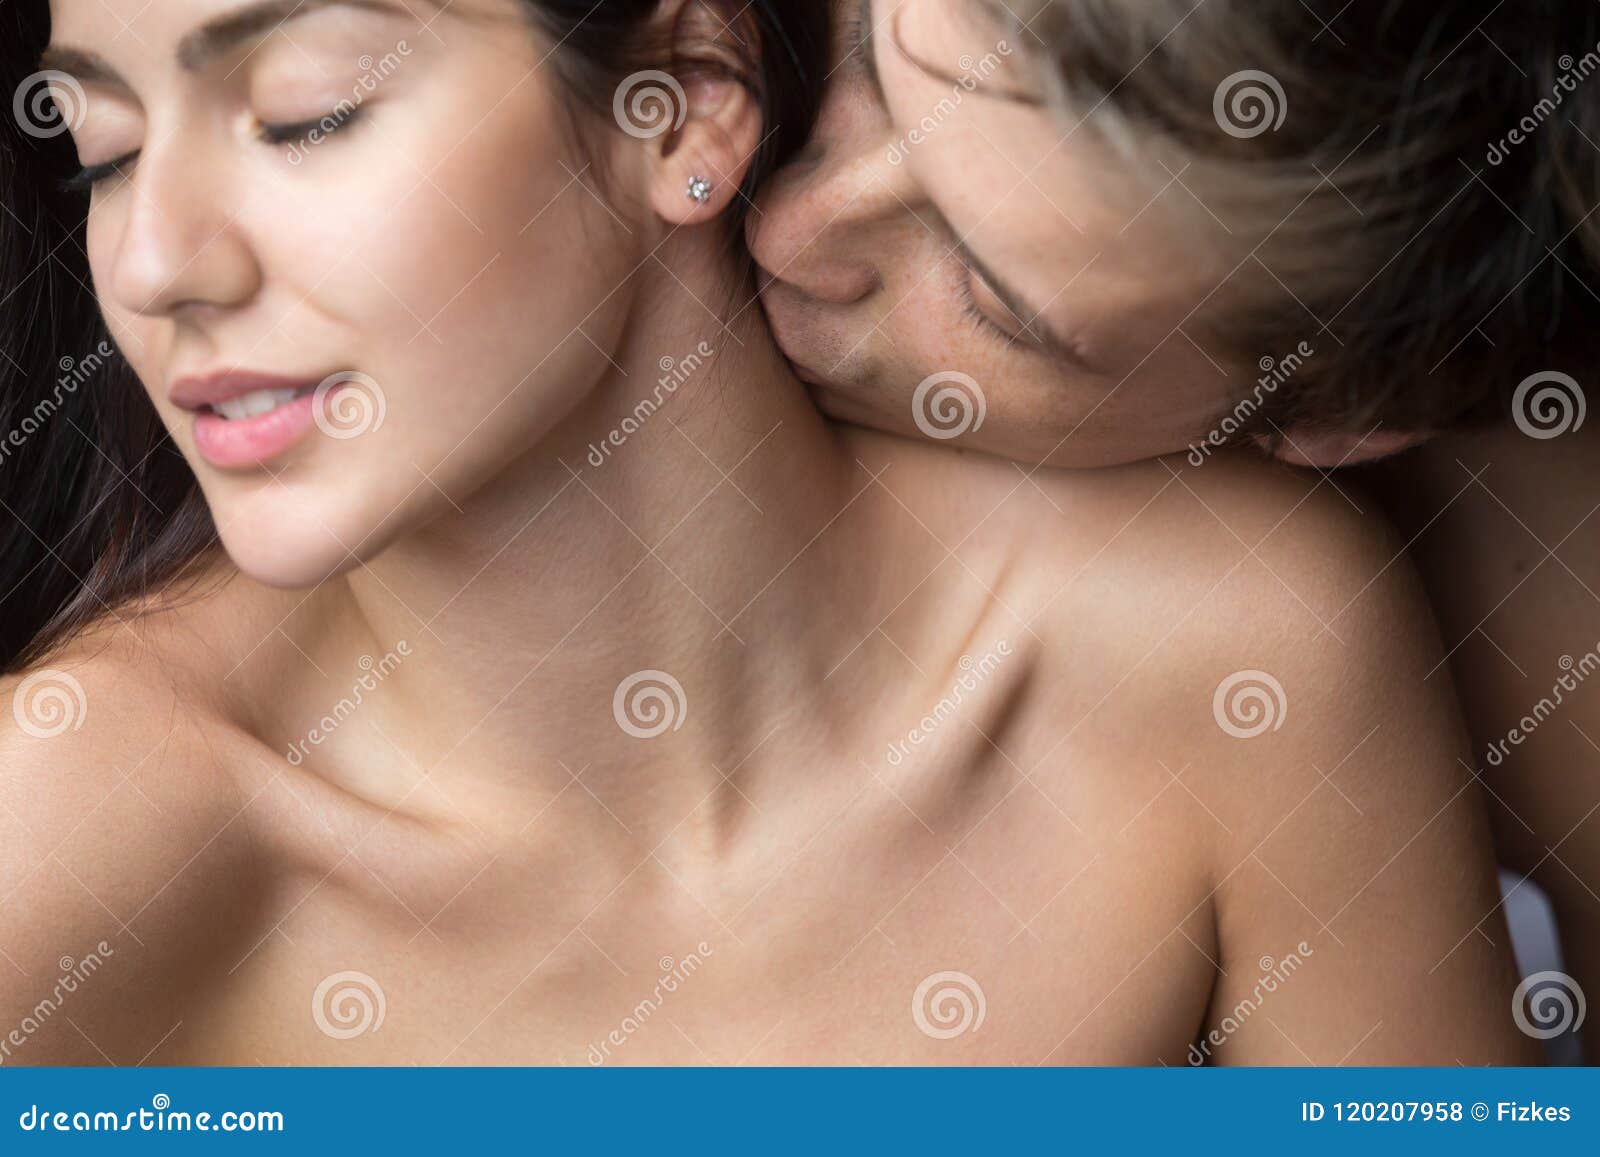 passionate man kissing woman on neck enjoying foreplay